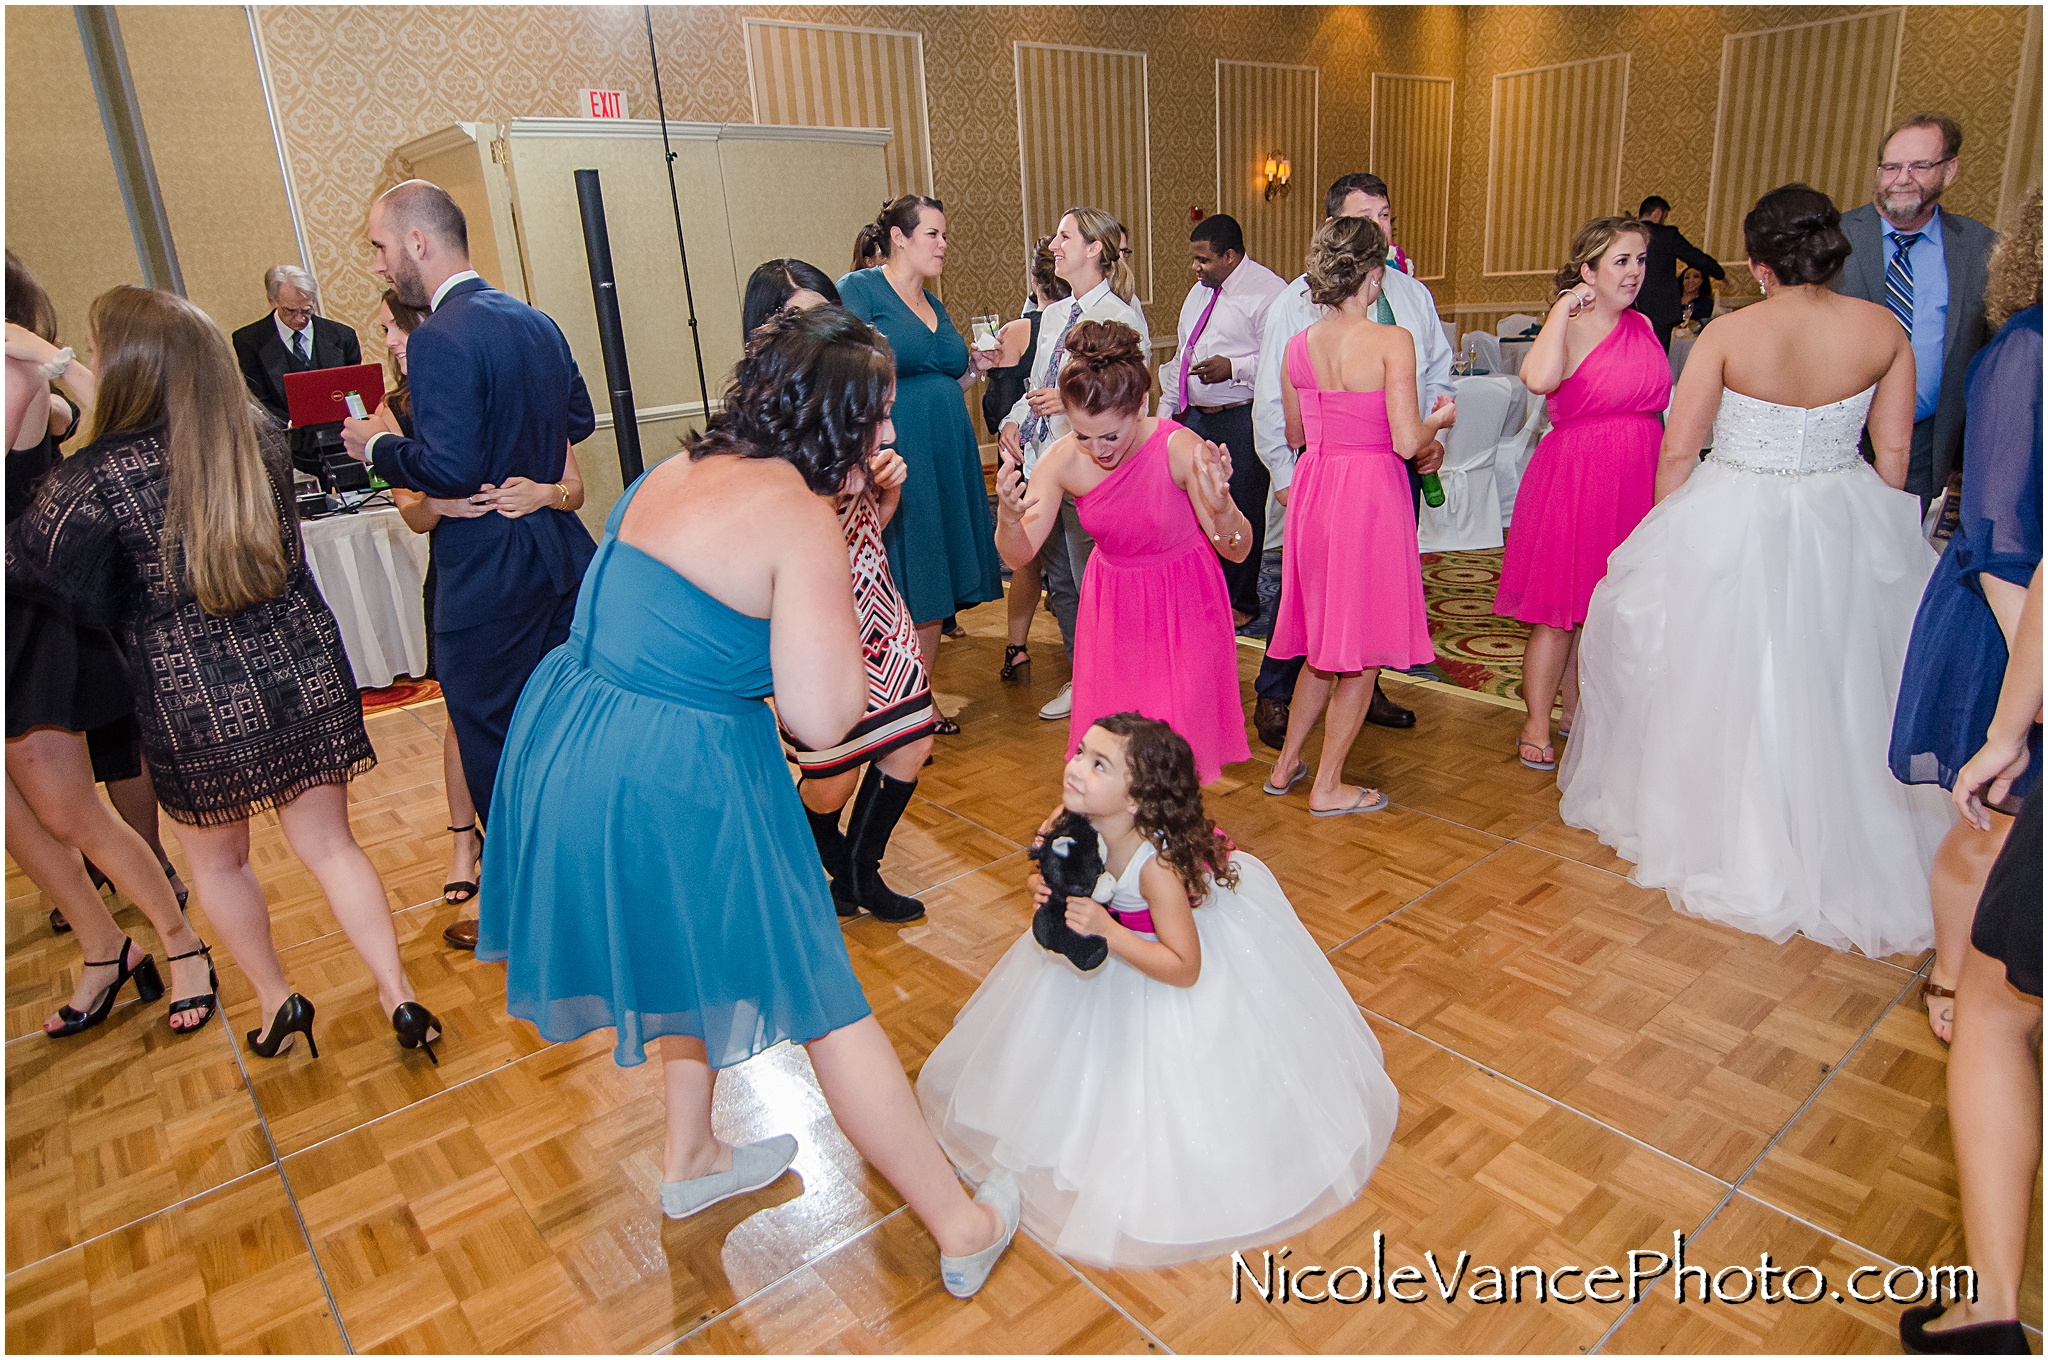 Dancing at the reception at Virginia Crossings.